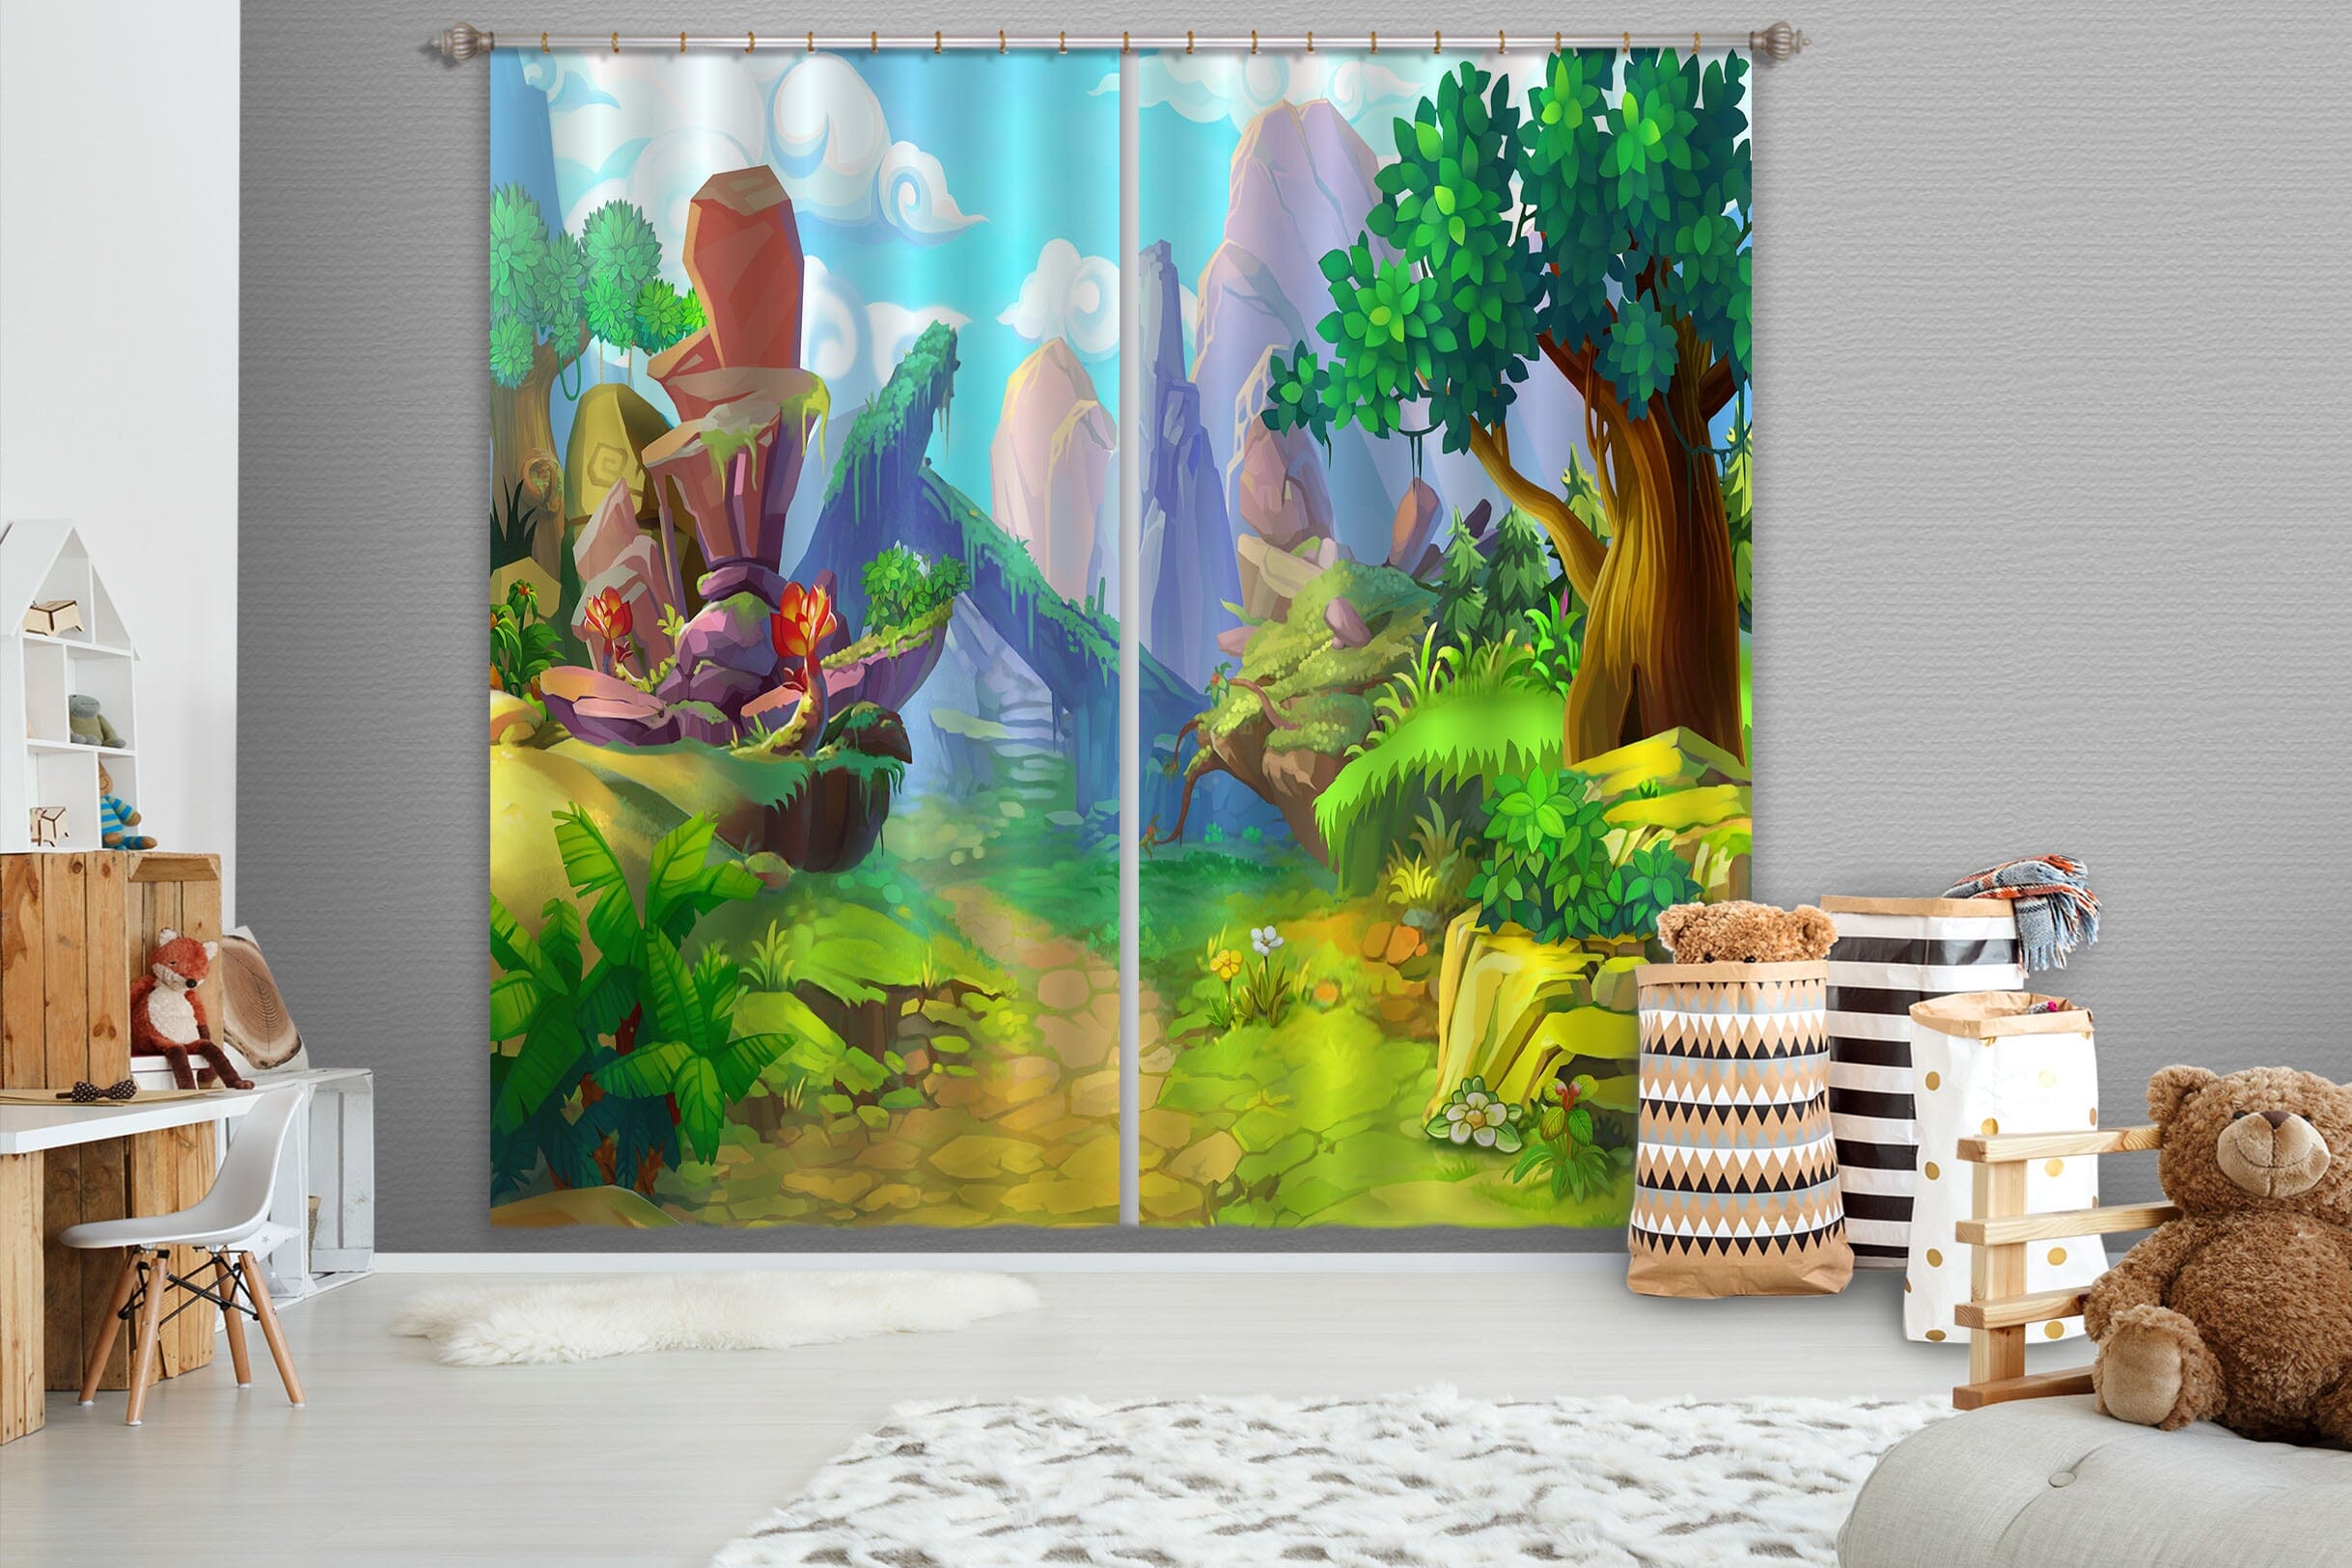 3D Fairy Forest 776 Curtains Drapes Wallpaper AJ Wallpaper 